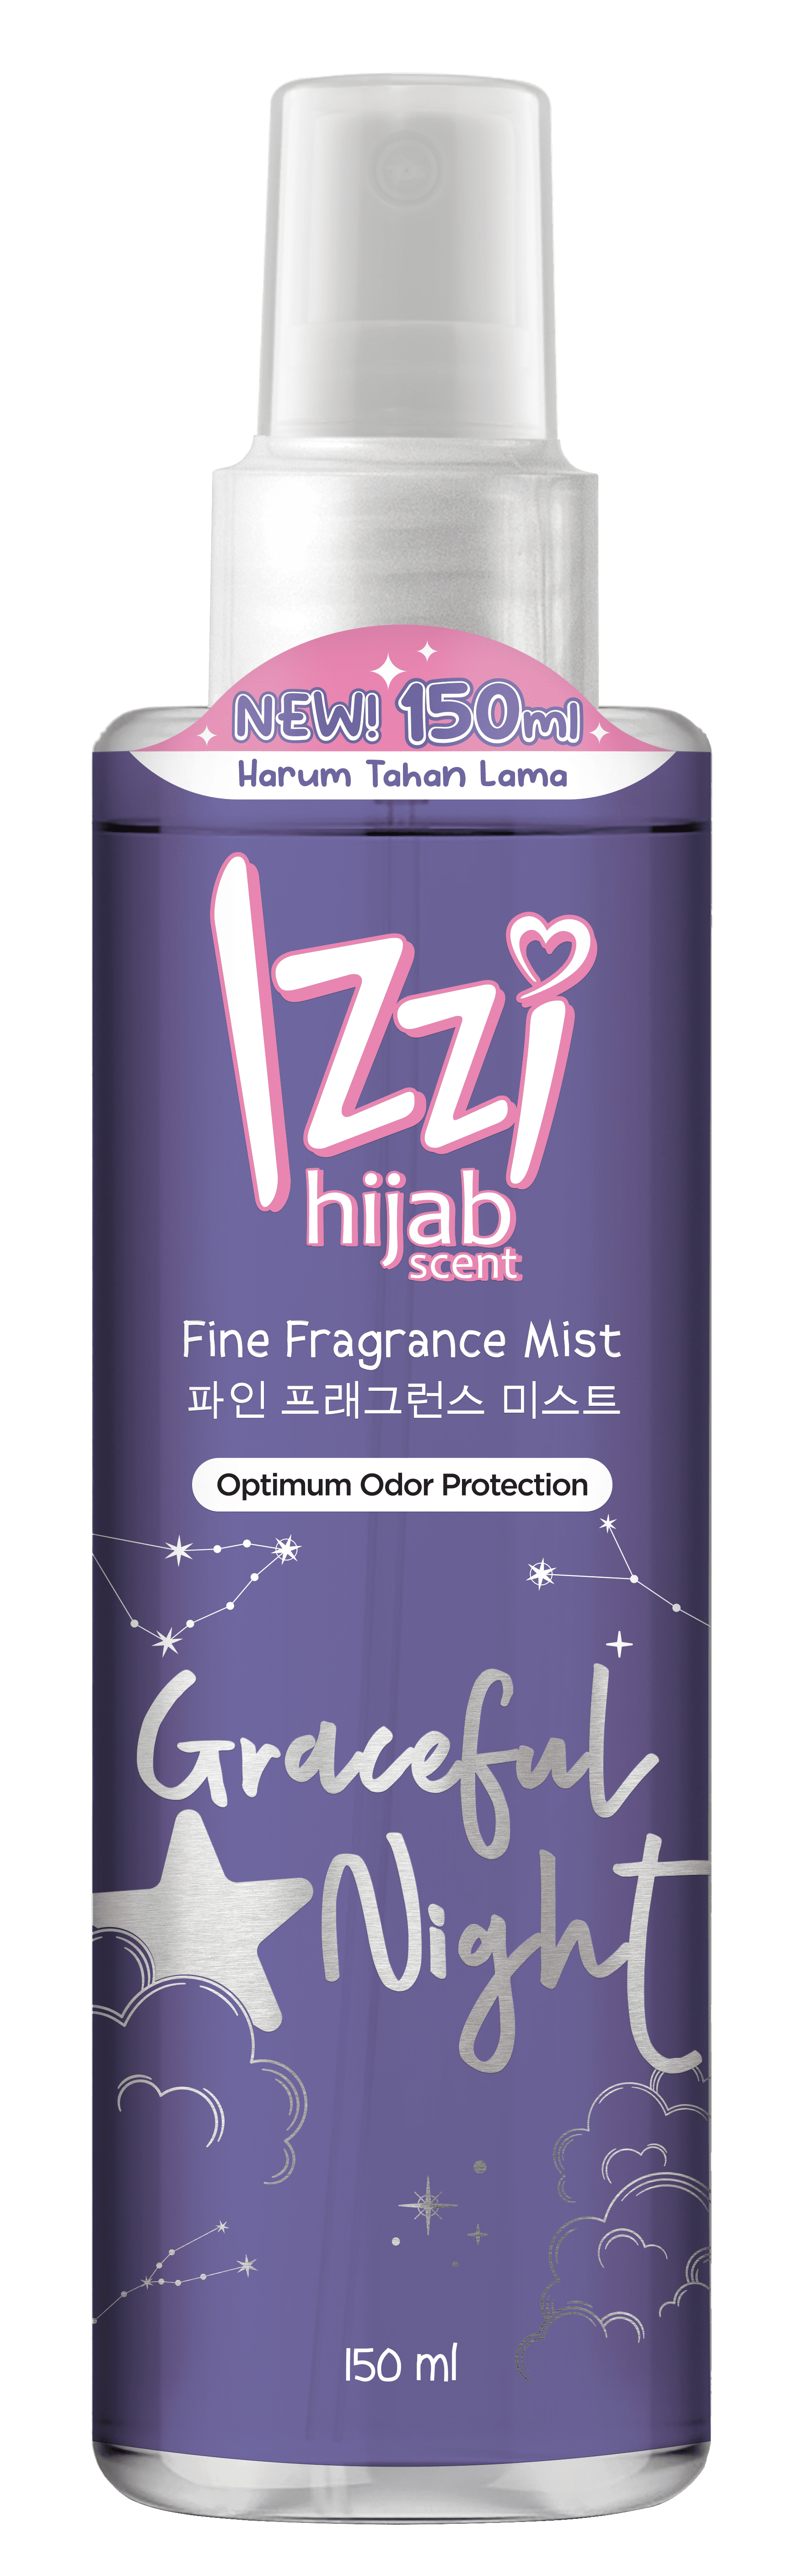 Fine Fragrance Mist Hijab Scent Graceful Night